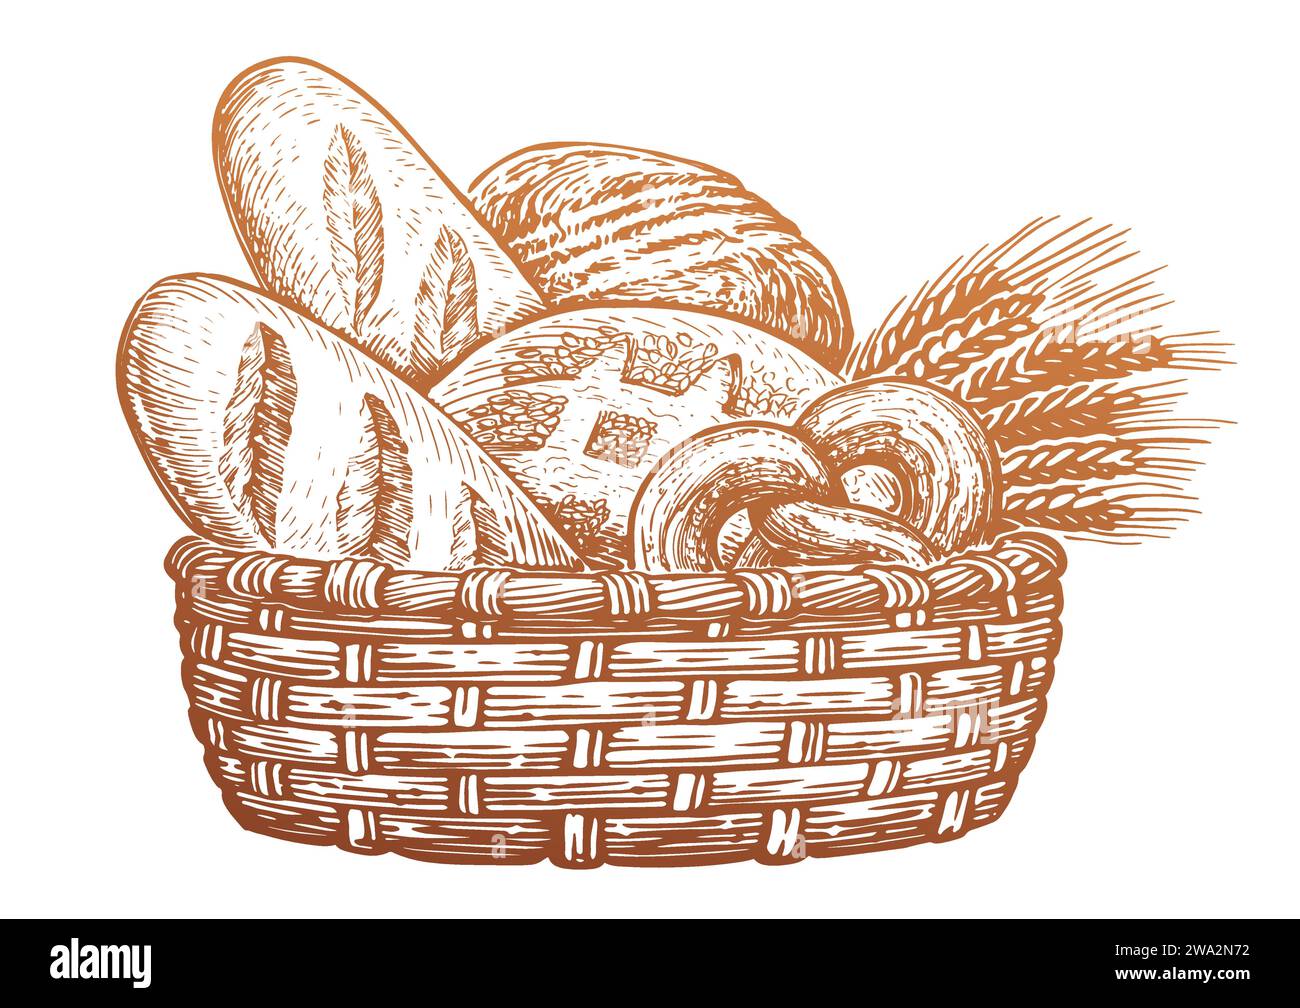 Korb voller Backwaren. Brot und Gebäck, Skizze Vintage Vektor Illustration Stock Vektor